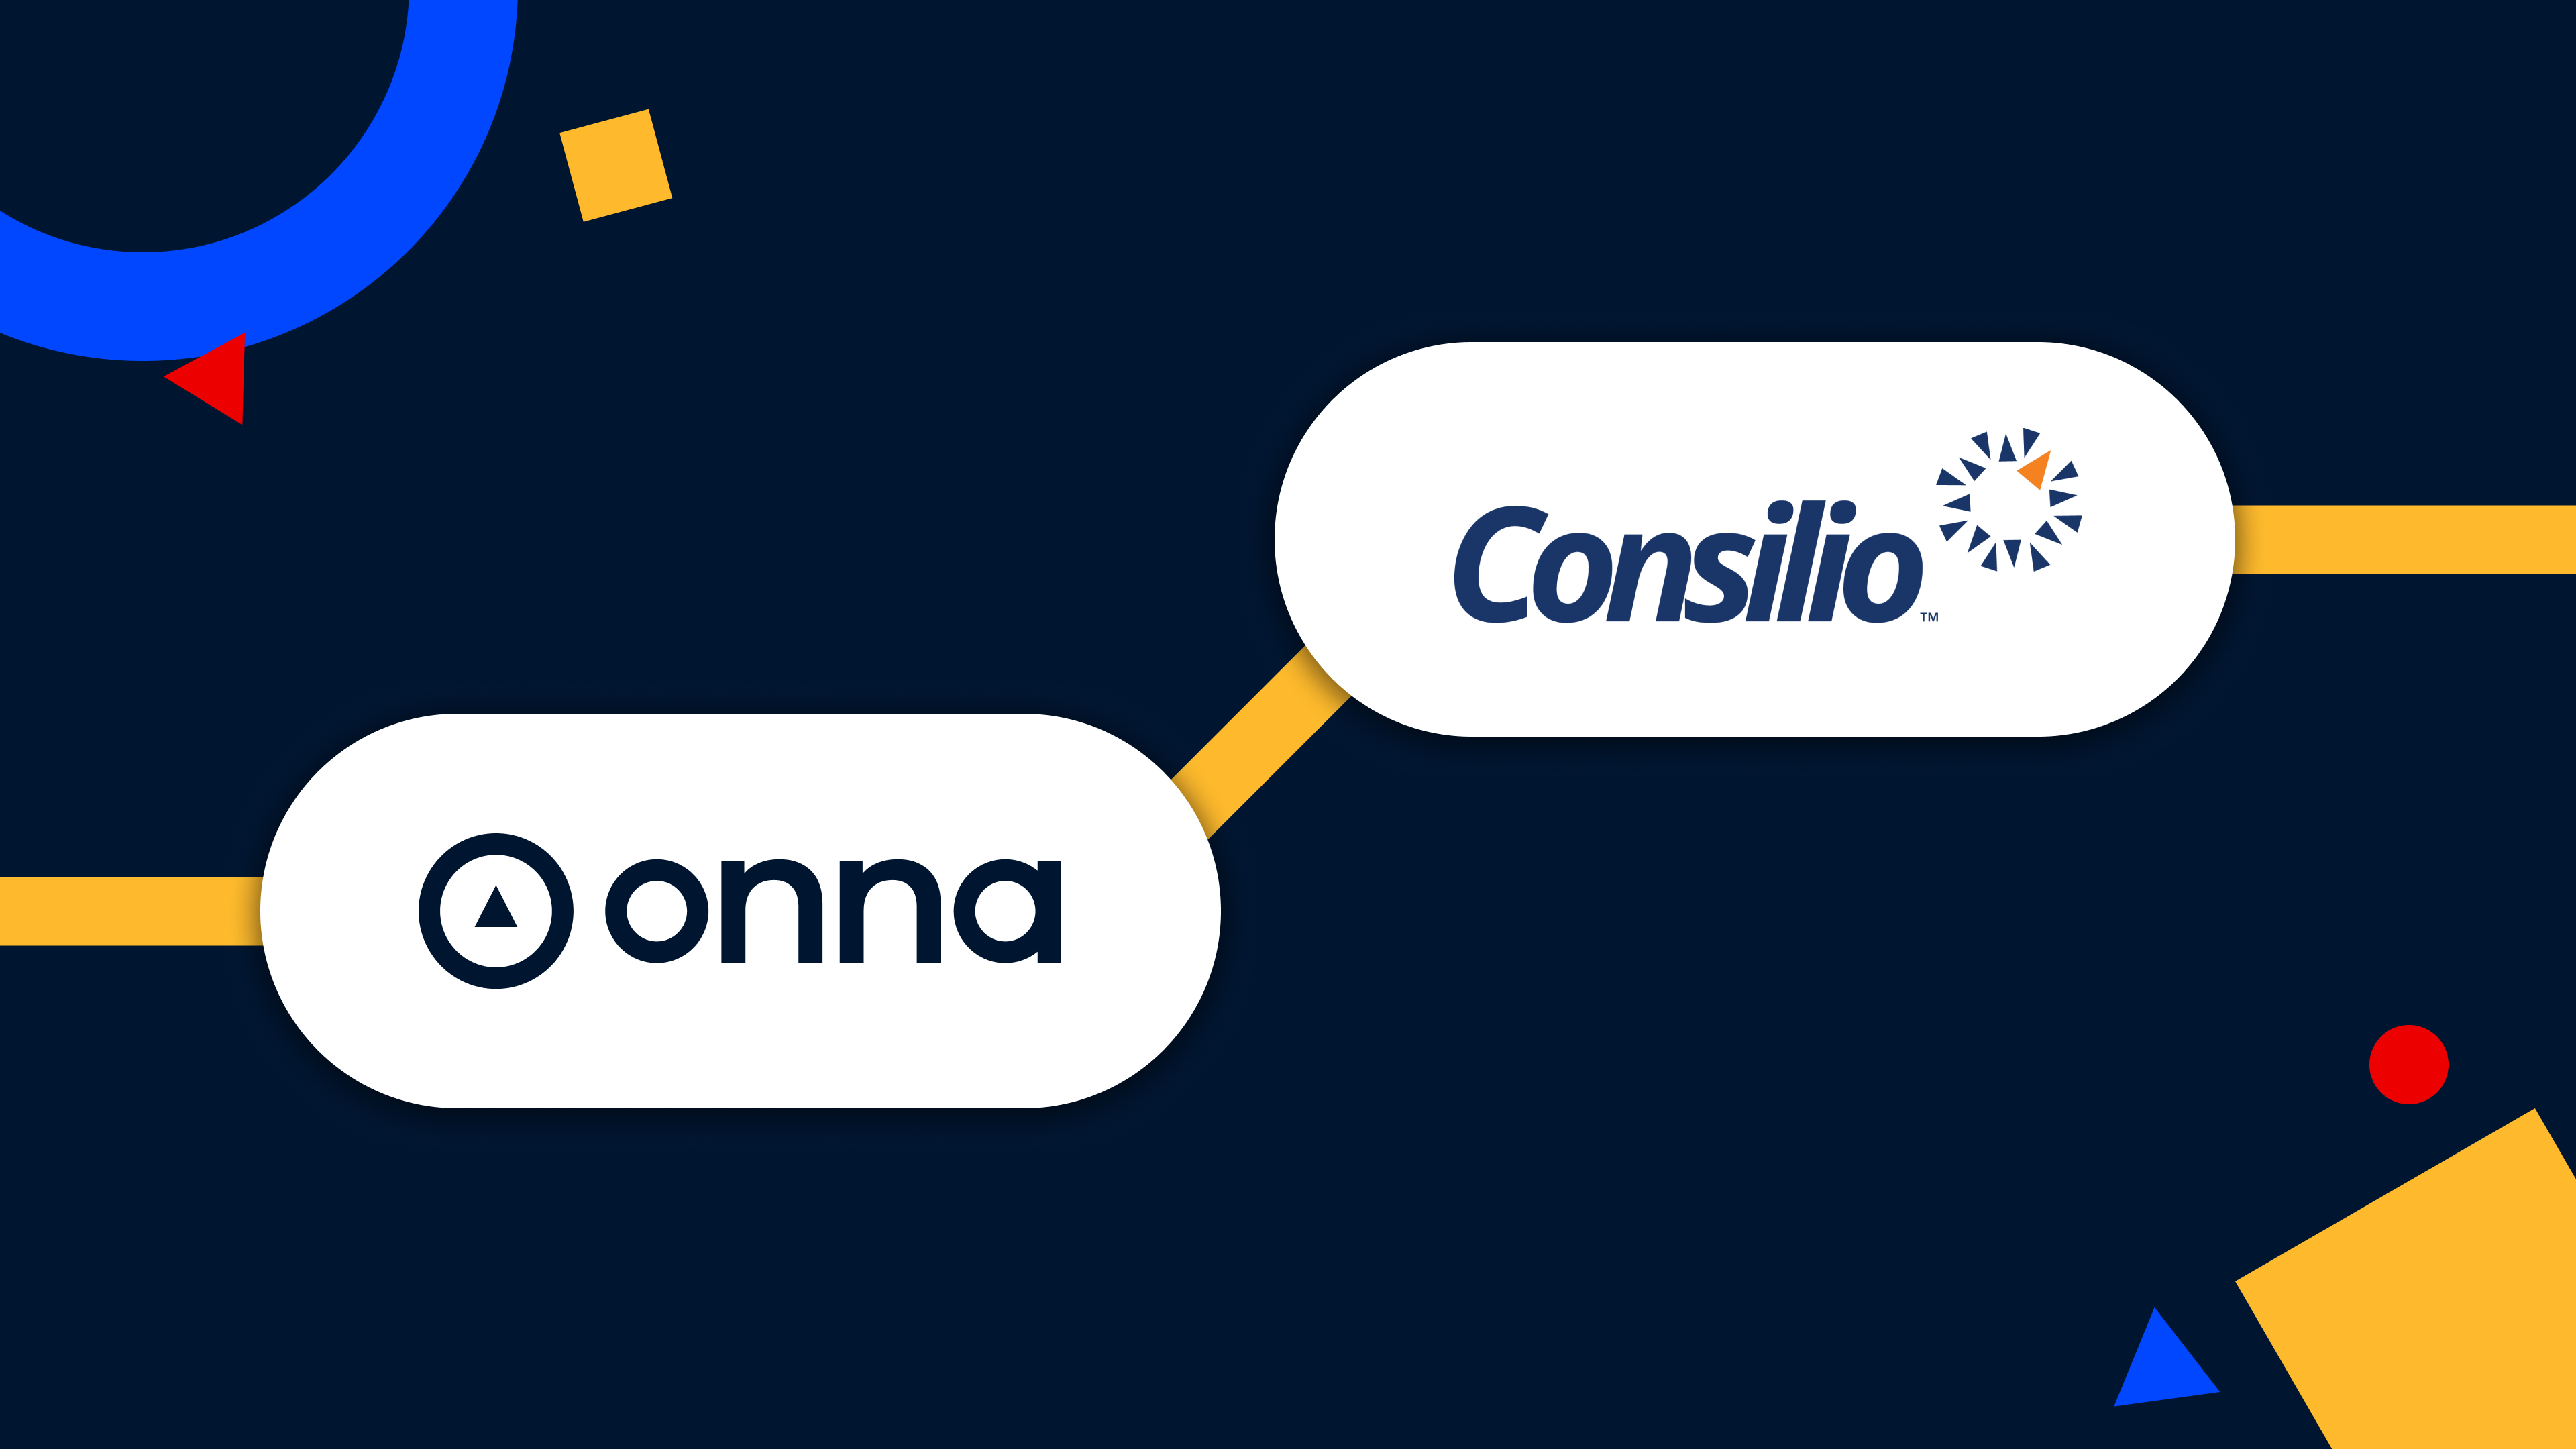 blog-banner-onna-consilio-partnership